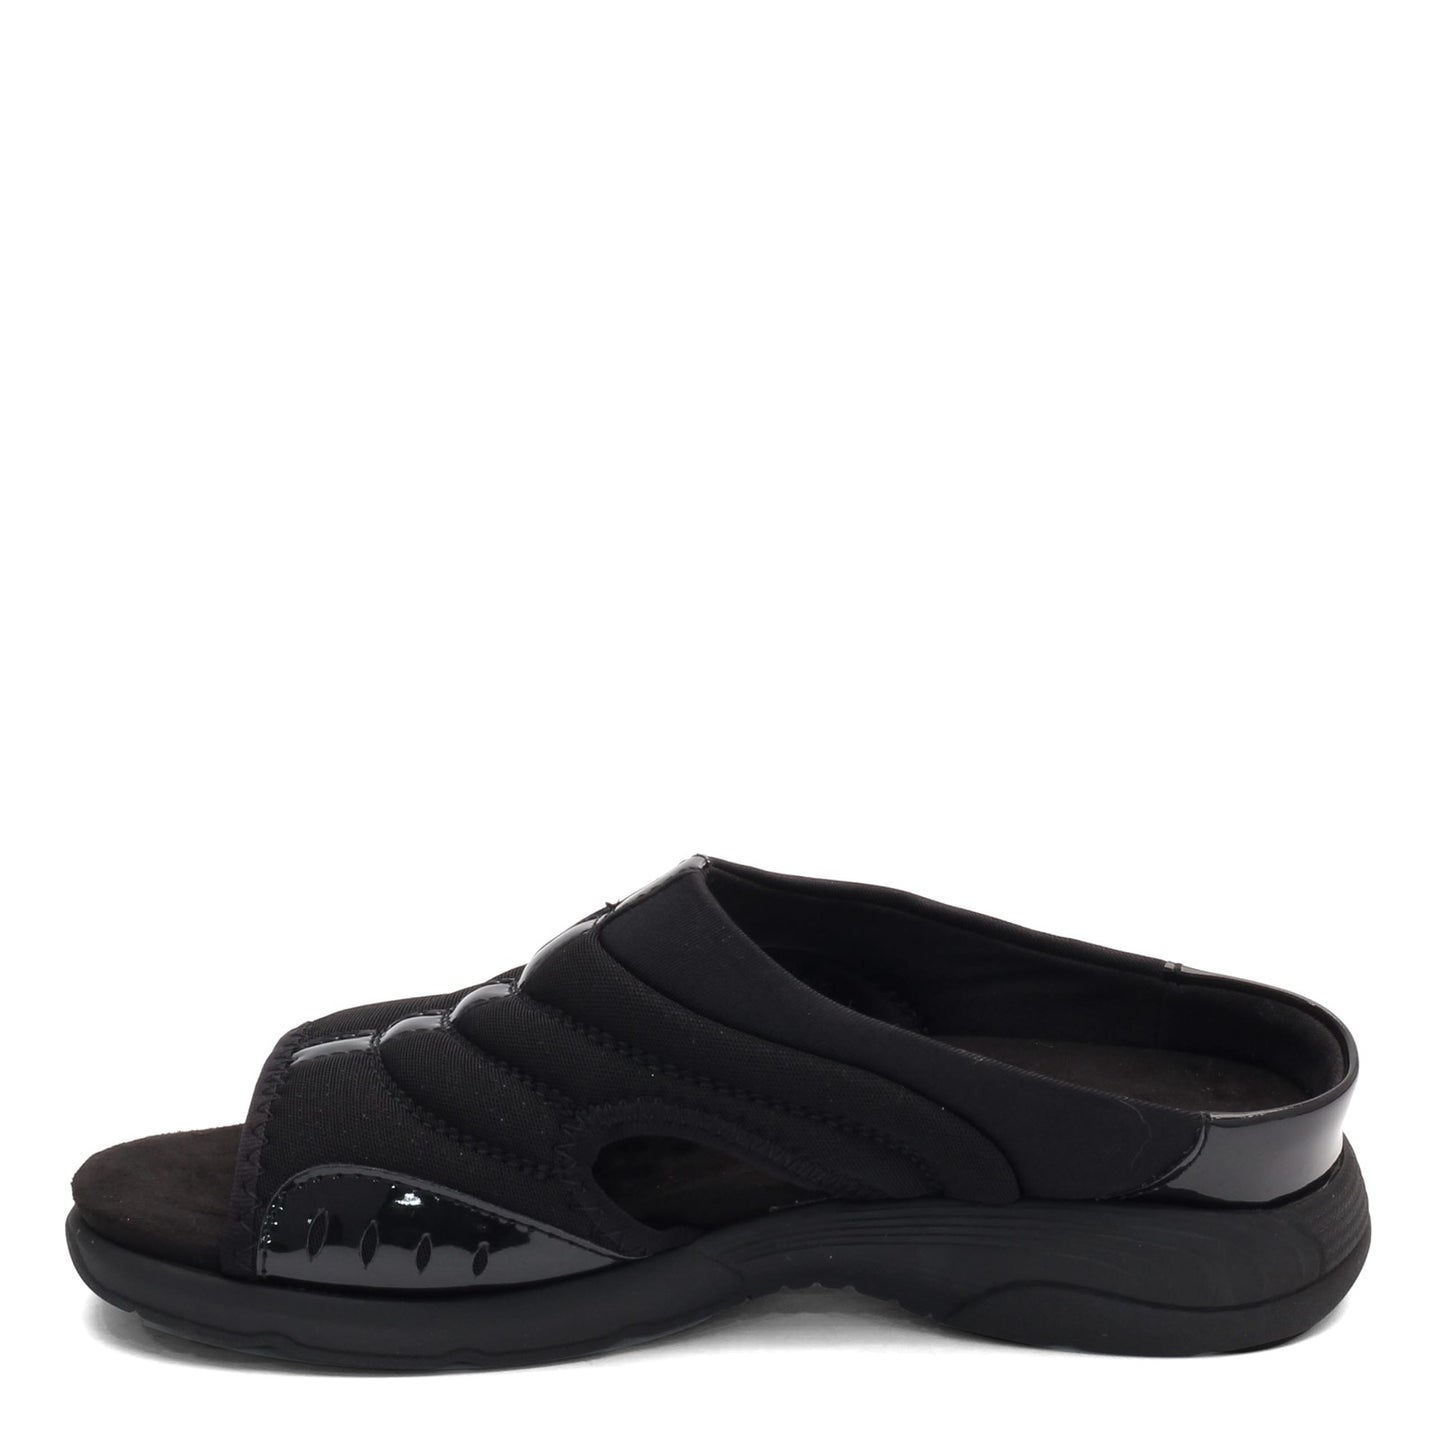 Peltz Shoes  Women's Easy Spirit Traciee2 Sandal BLACK / PATENT TRACIEE2-BLK03